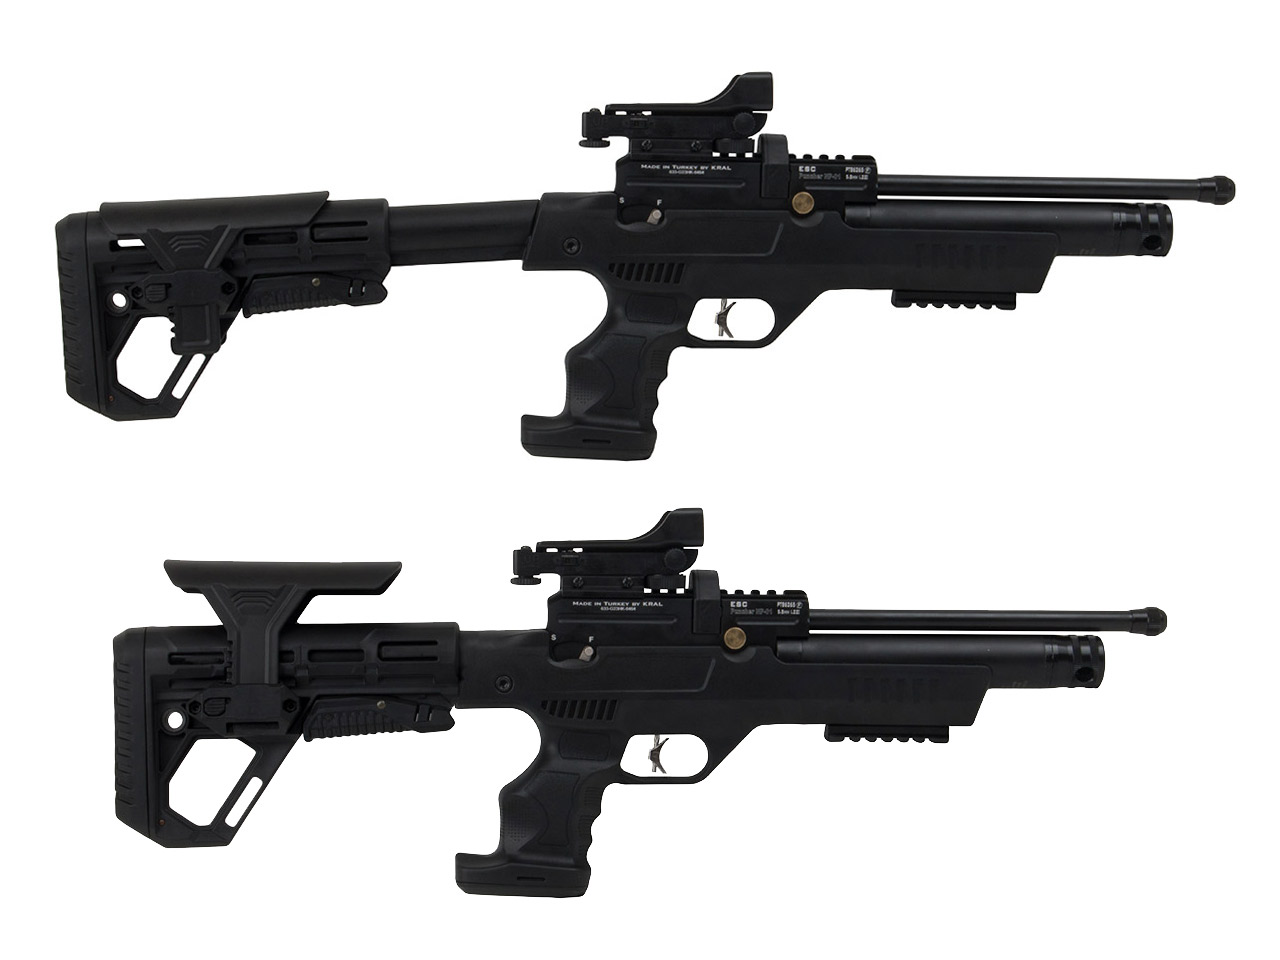 Pressluftpistole Kral Arms Puncher NP-01 Hinterschaft Kaliber 4,5 mm (P18)